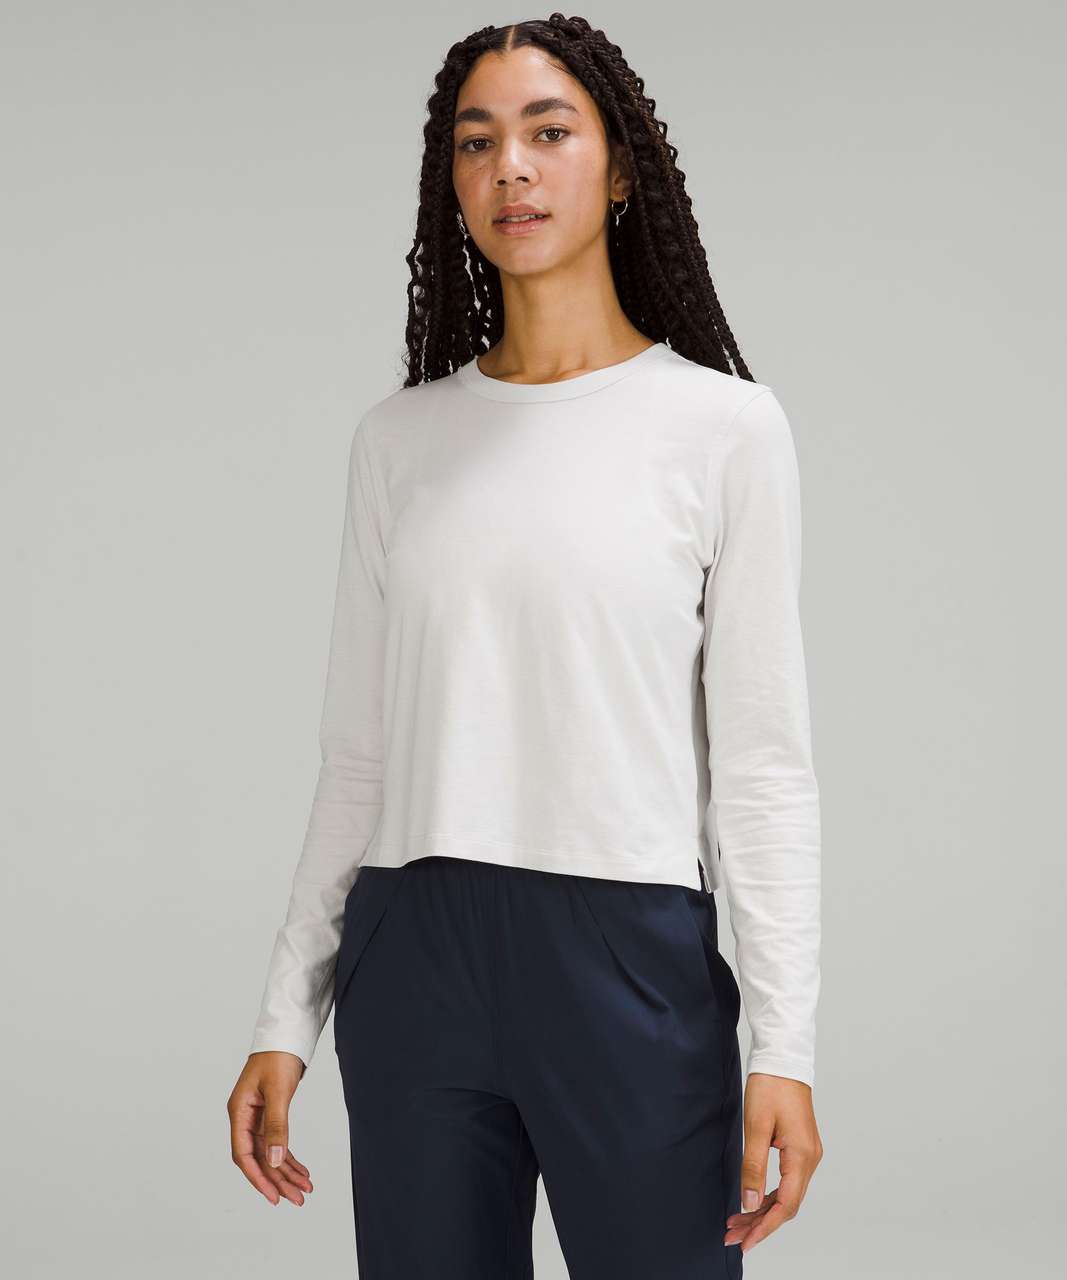 Lululemon Classic-Fit Cotton-Blend Long Sleeve Shirt - Vapor